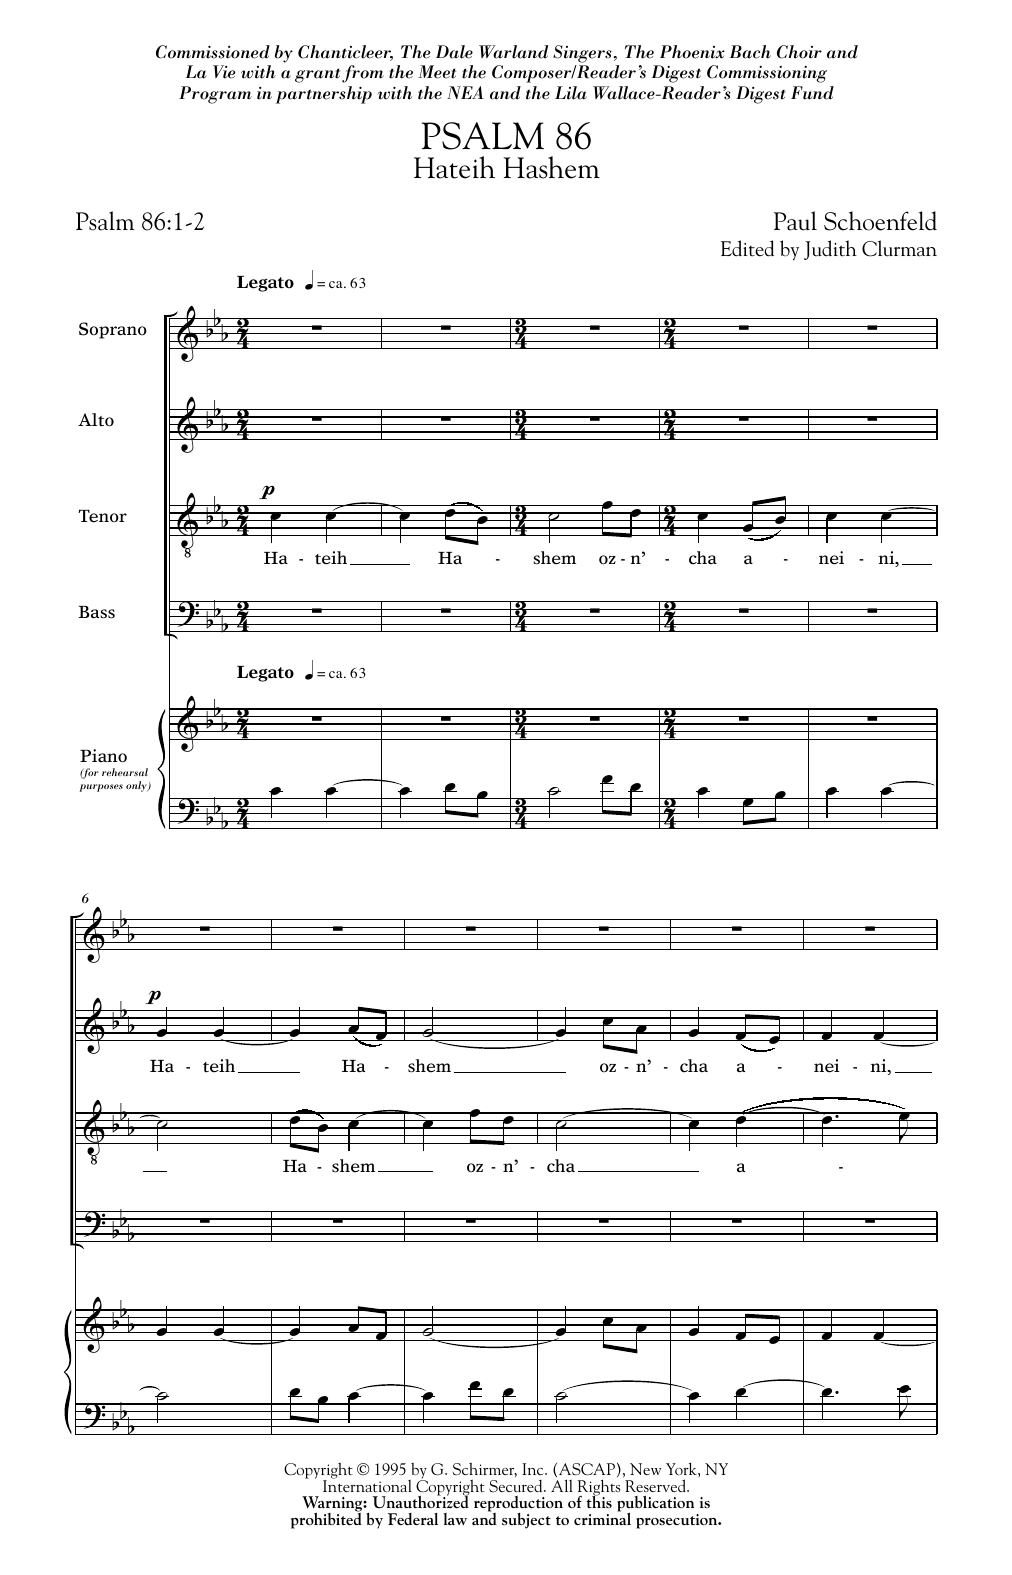 Paul Schoenfeld Psalm 86 sheet music notes and chords arranged for SATB Choir